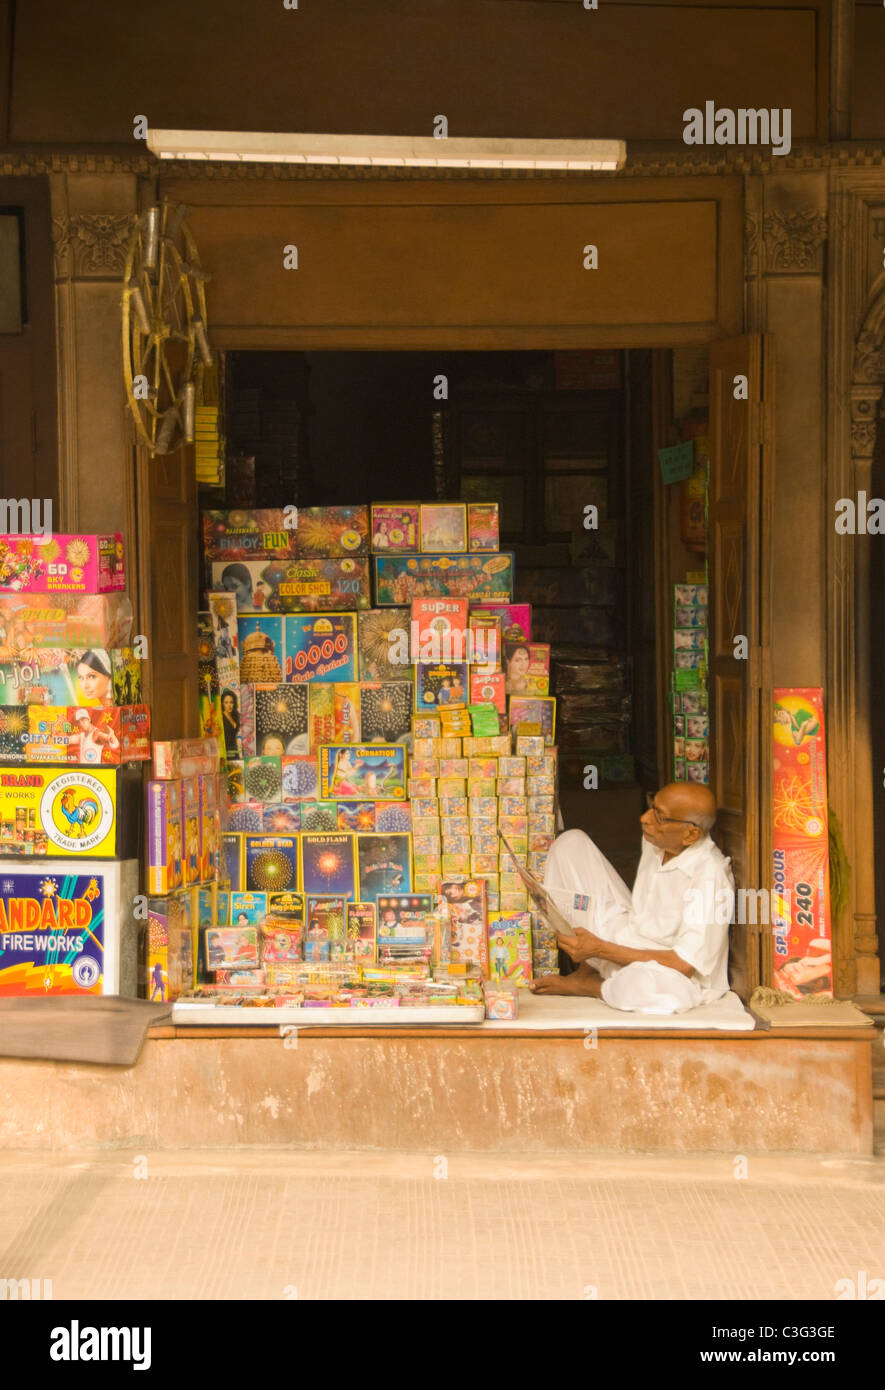 Vendor sitting in a fireworks store, Chandni Chowk, Delhi, India Stock Photo